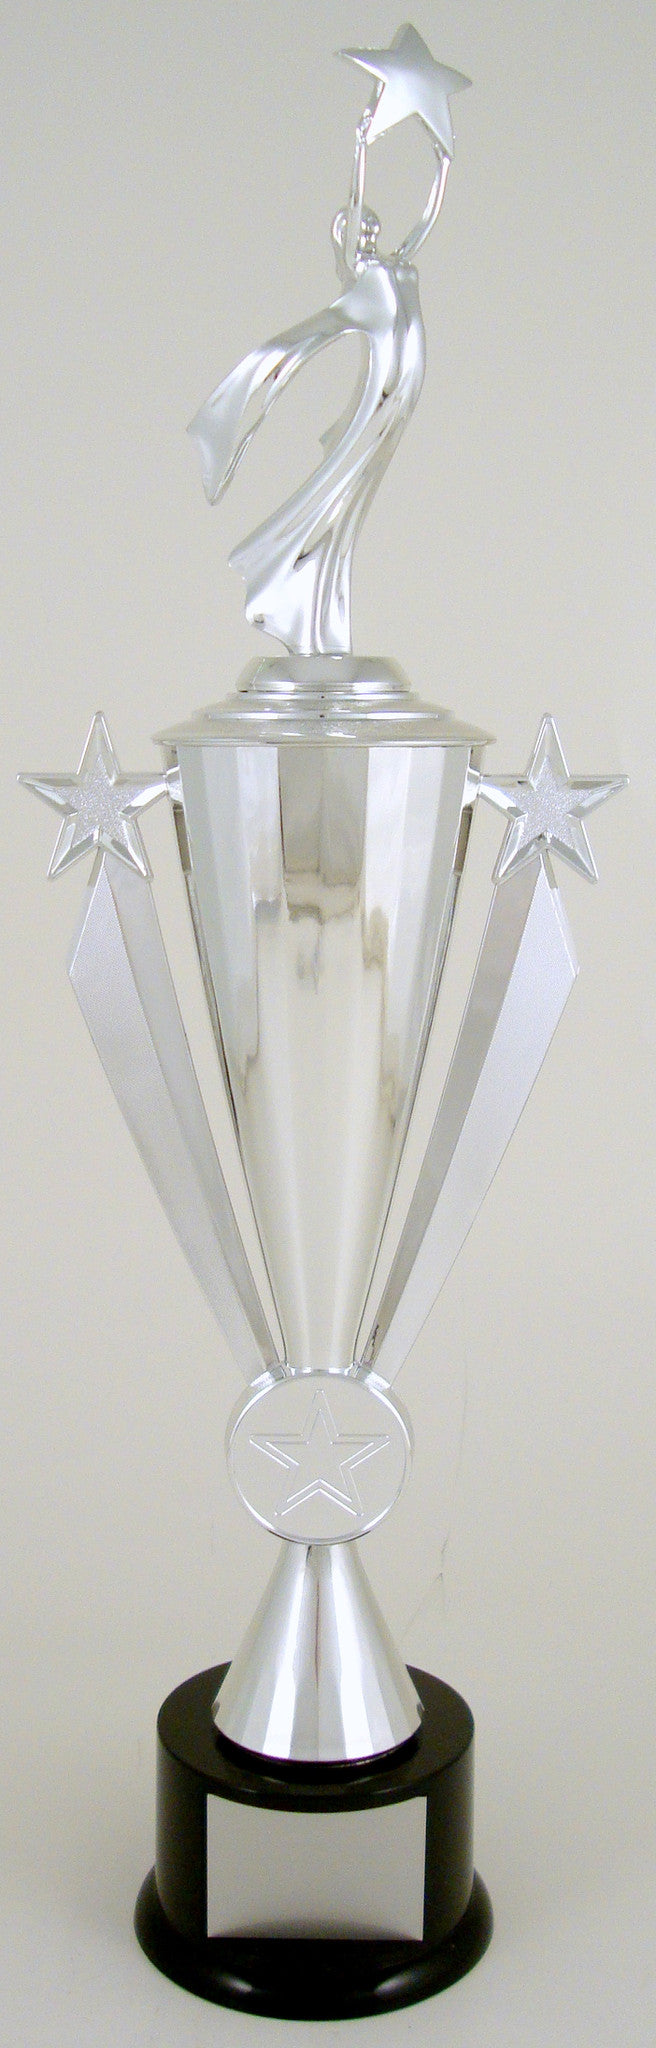 Silver Victory Star Trophy On Black Round Base-Trophy-Schoppy&